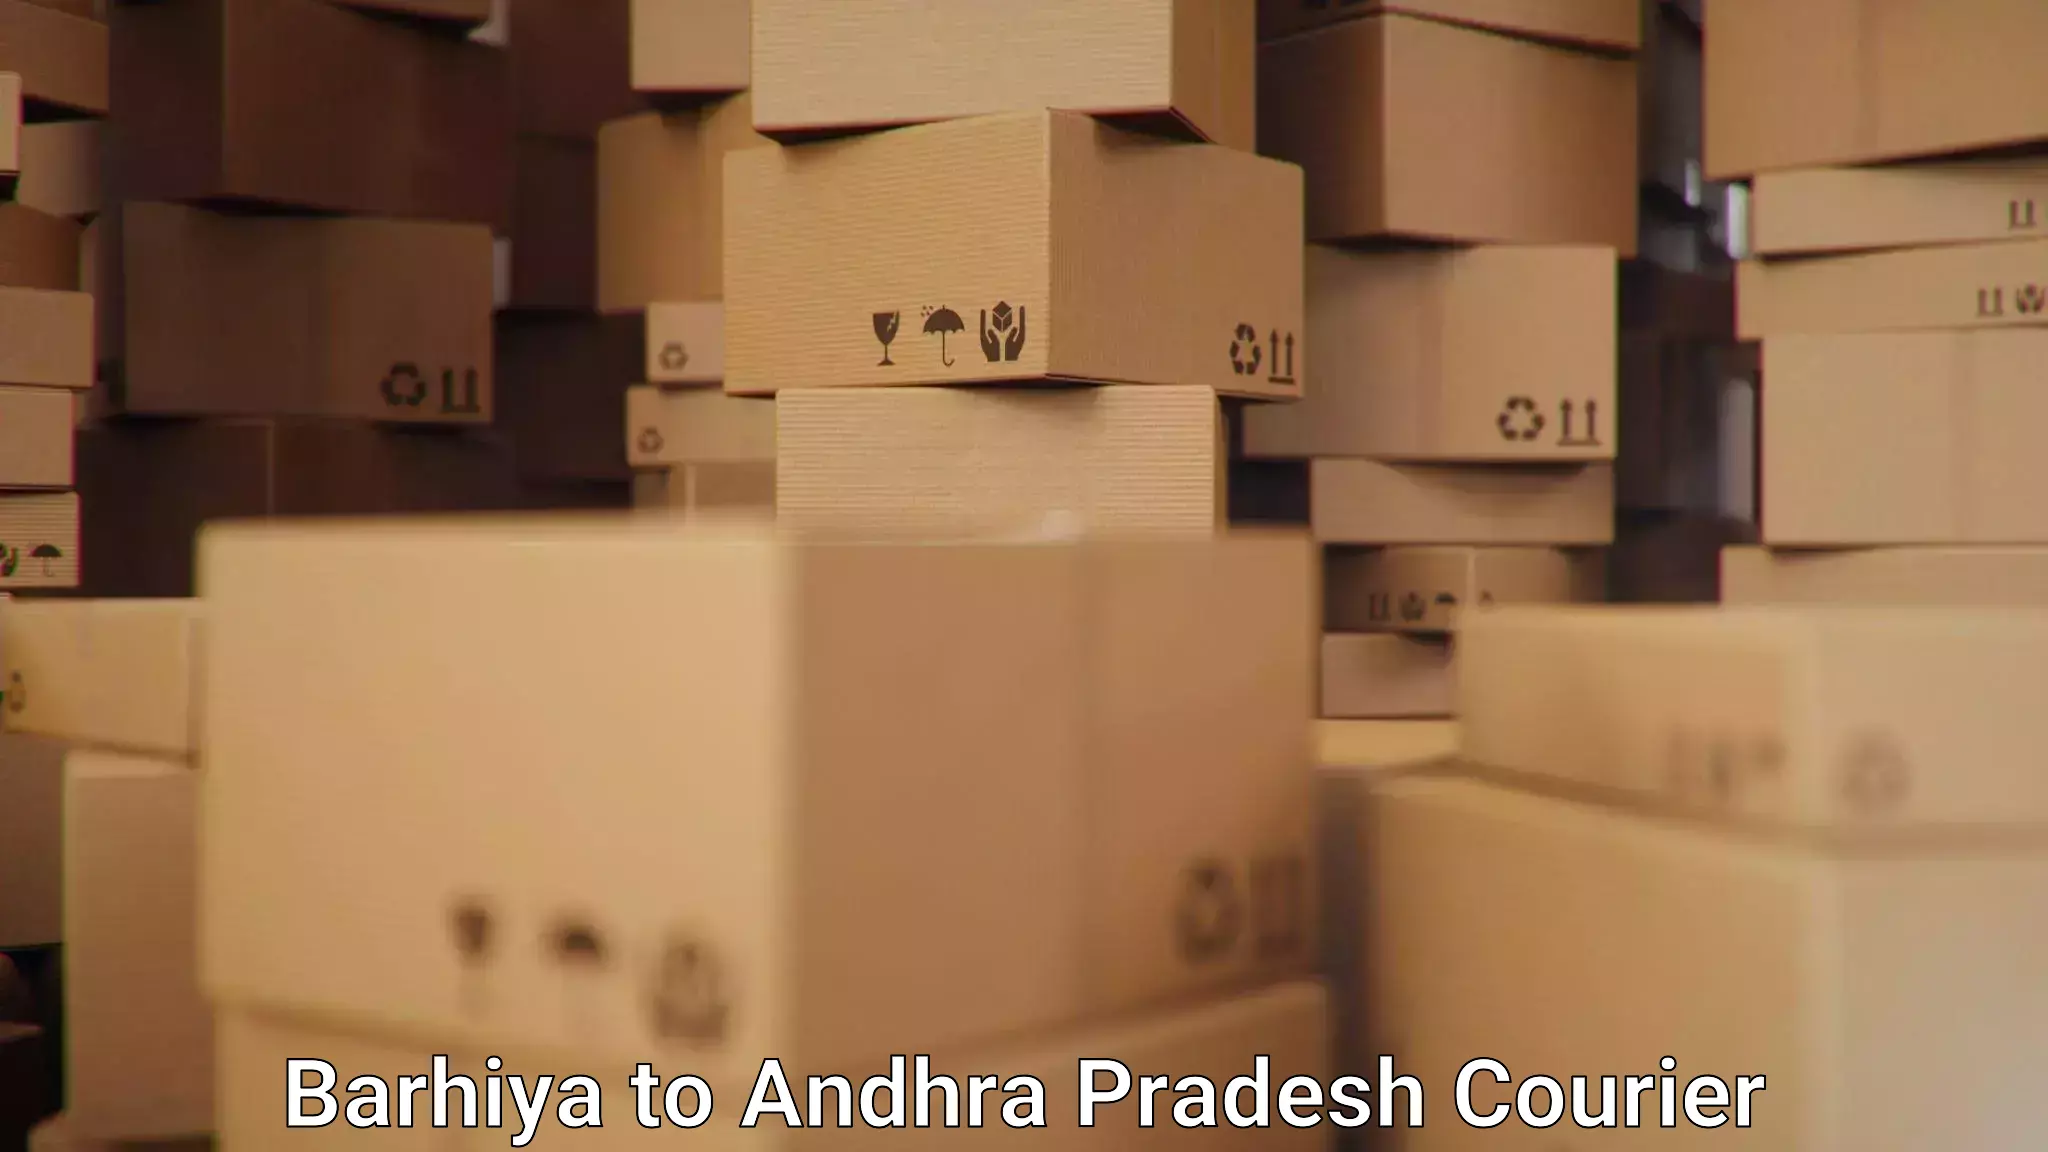 Global courier networks Barhiya to Kakinada